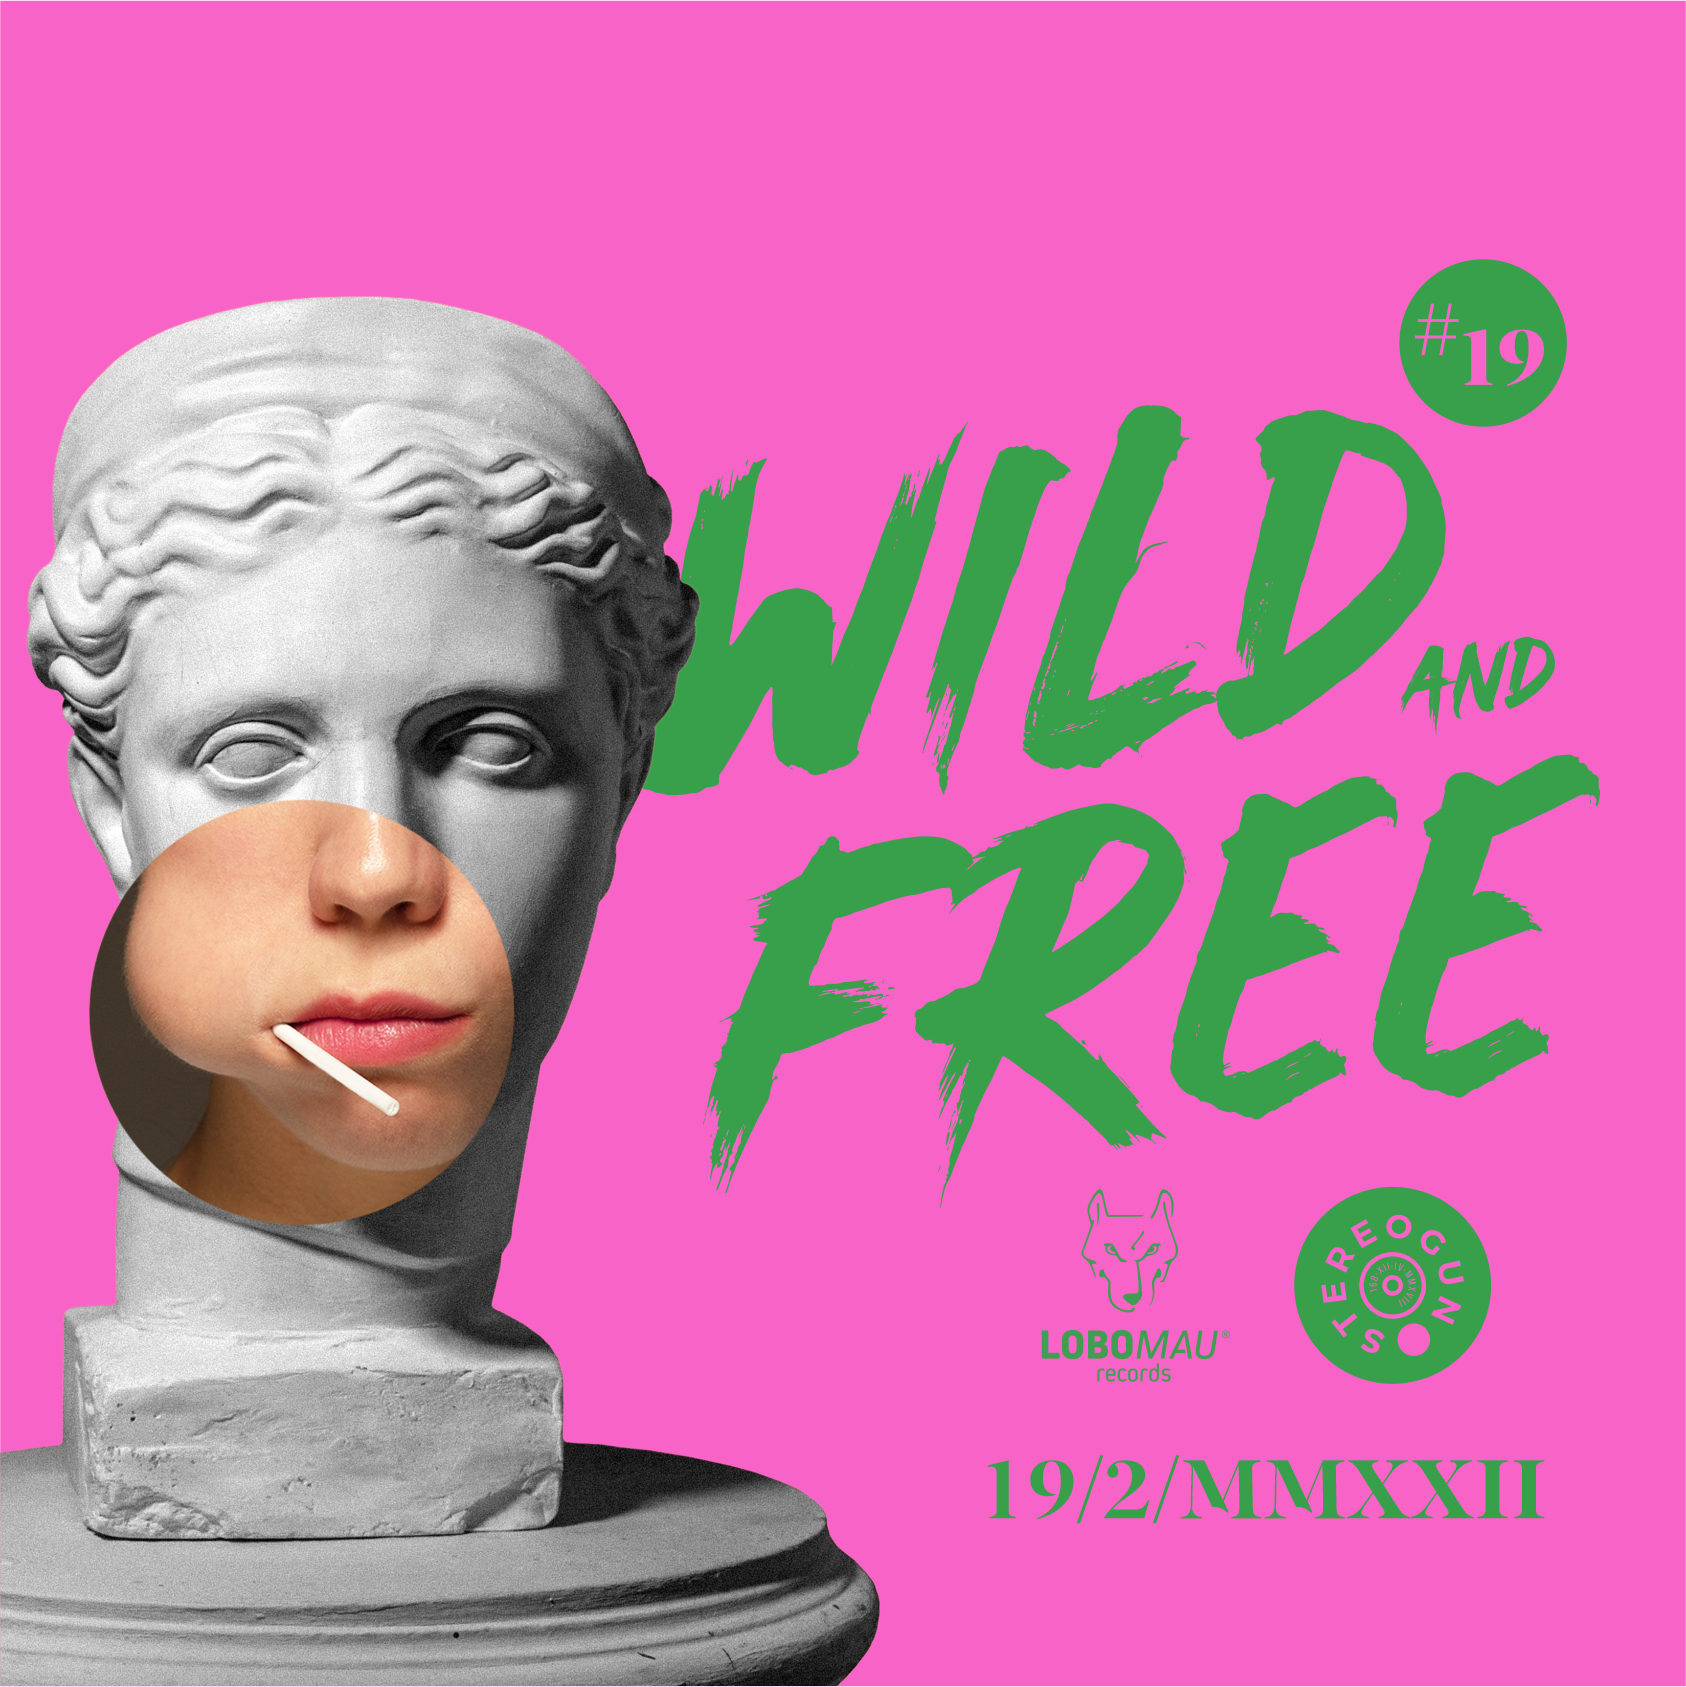 WILD AND FREE#19 LOBO MAU RECORDS